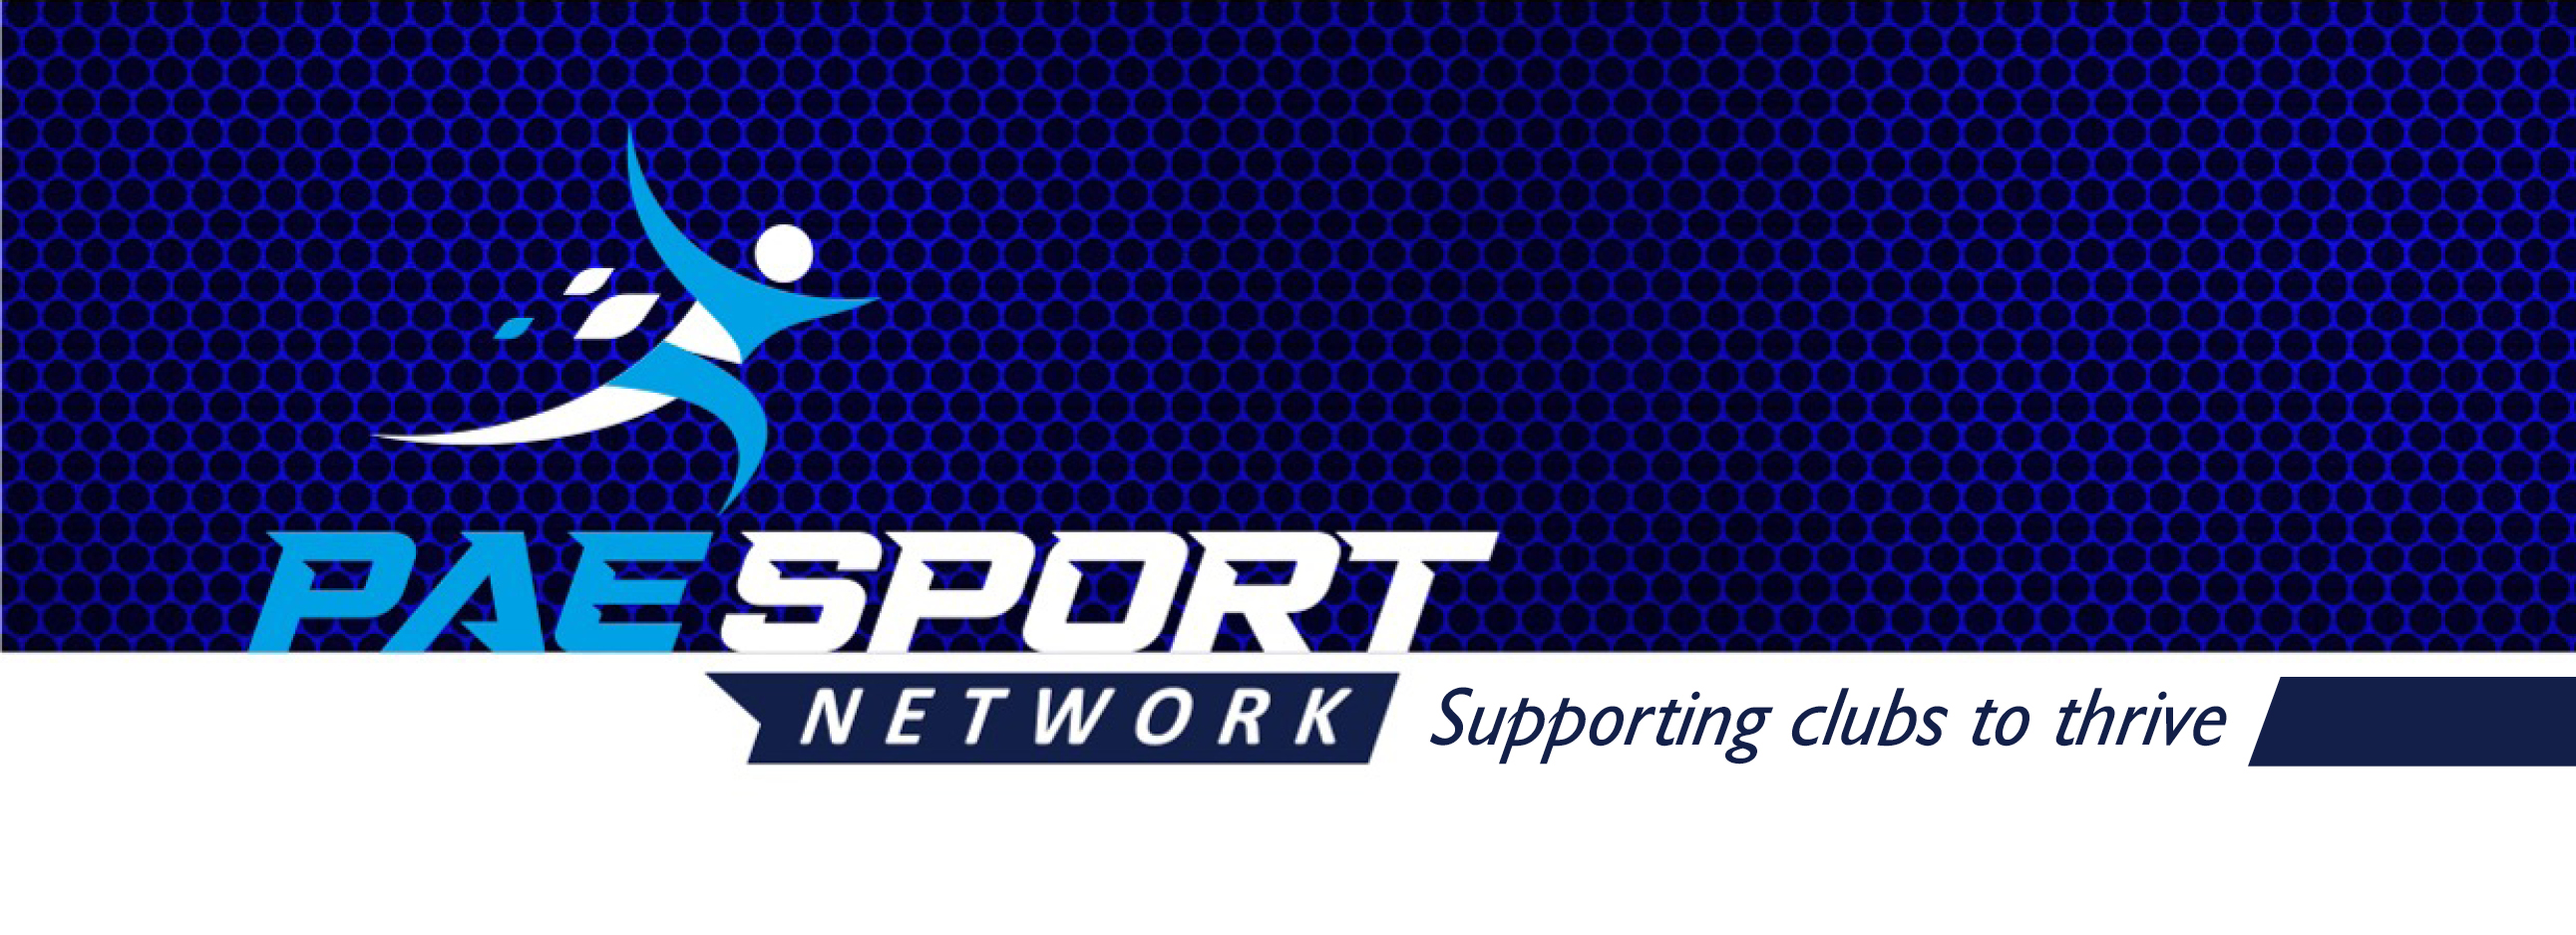 PAE sport network